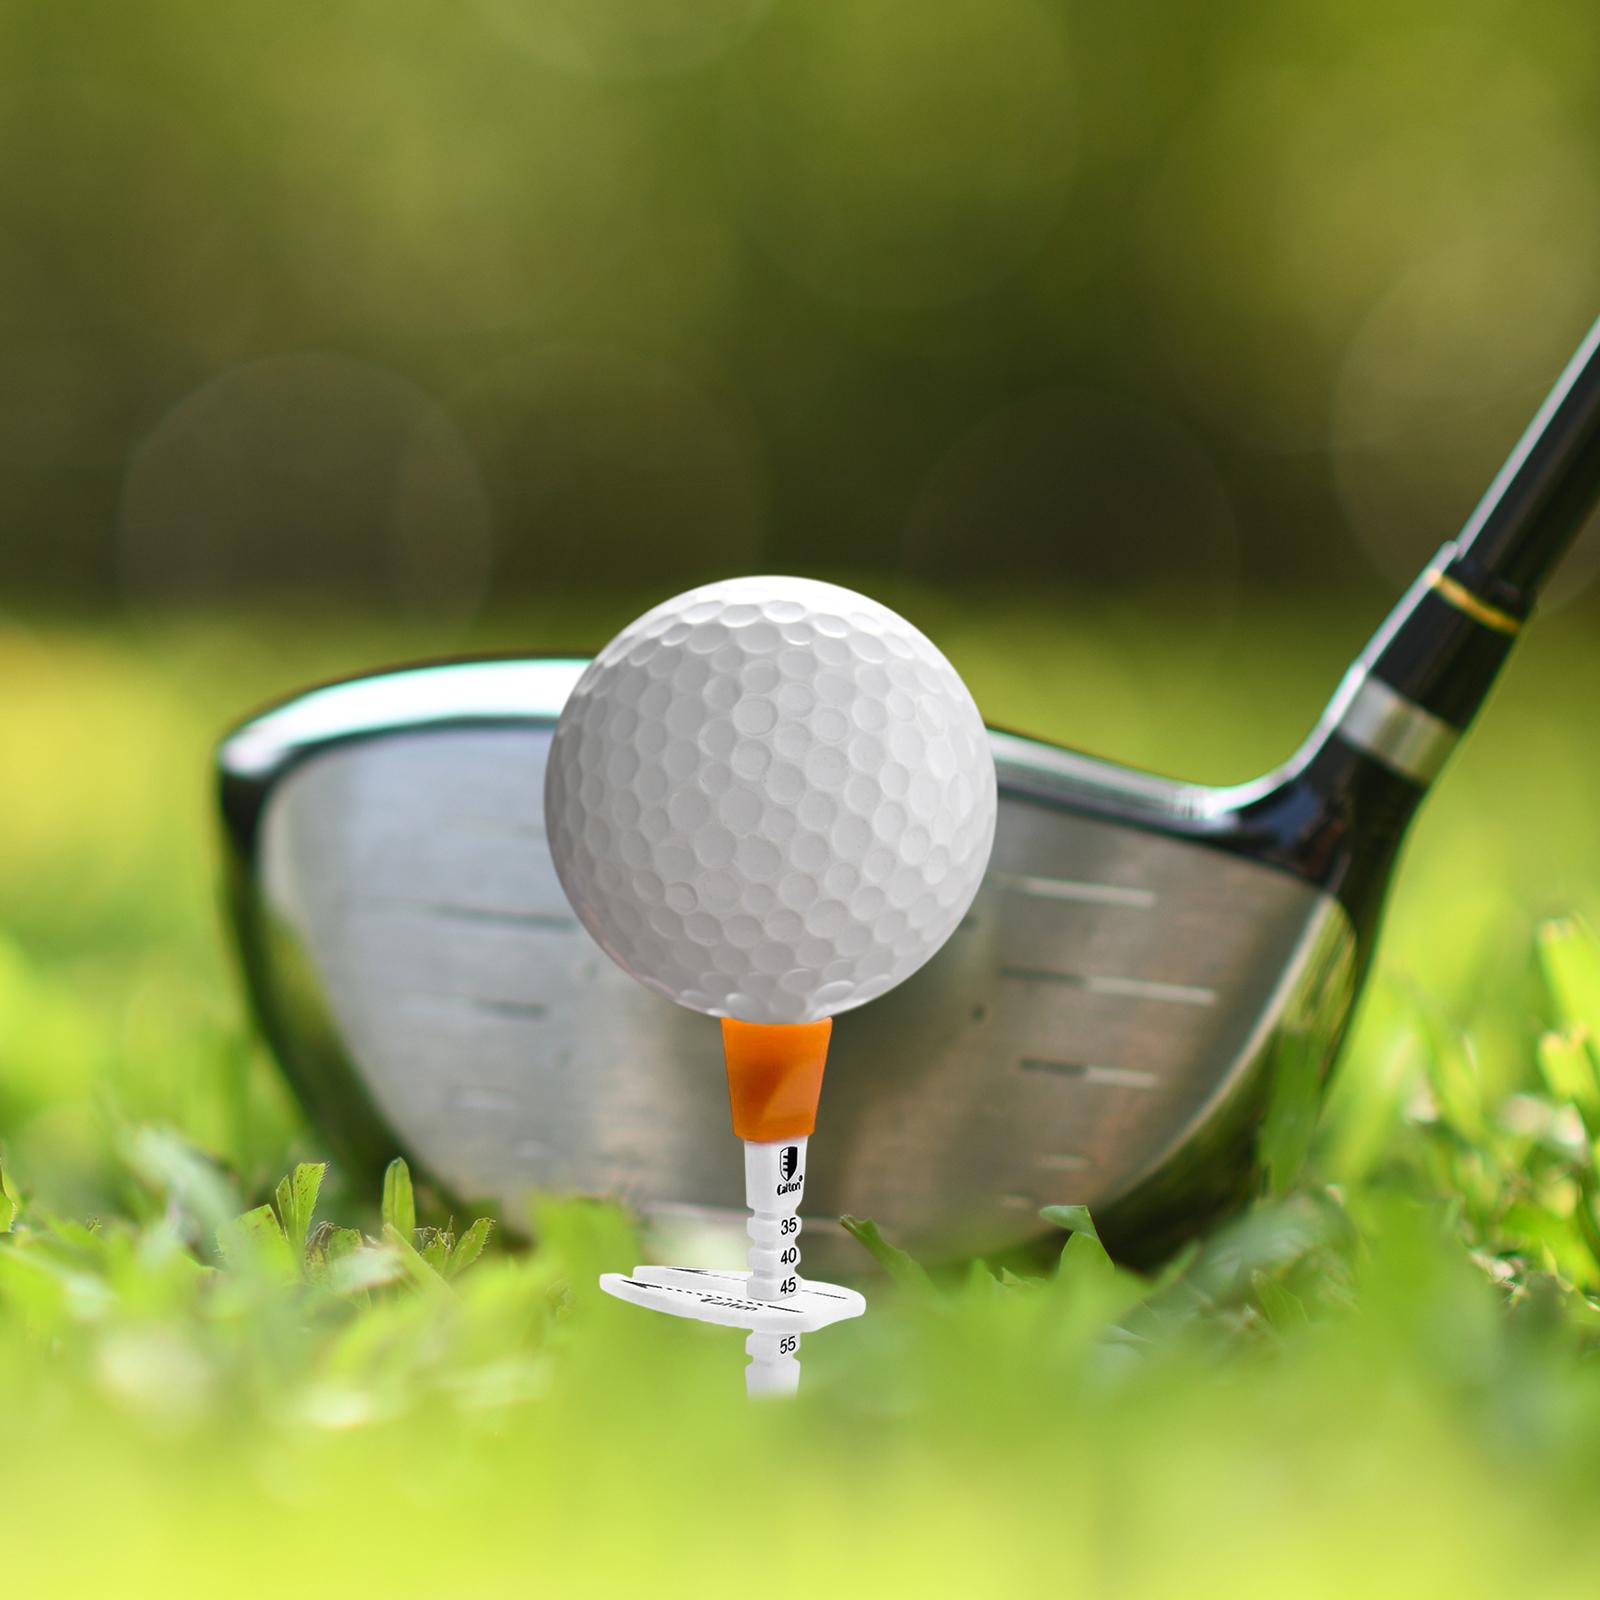 Adjustable Golf Tee Sports Accessories Parts High Stability Golf Ball Holder Orange 